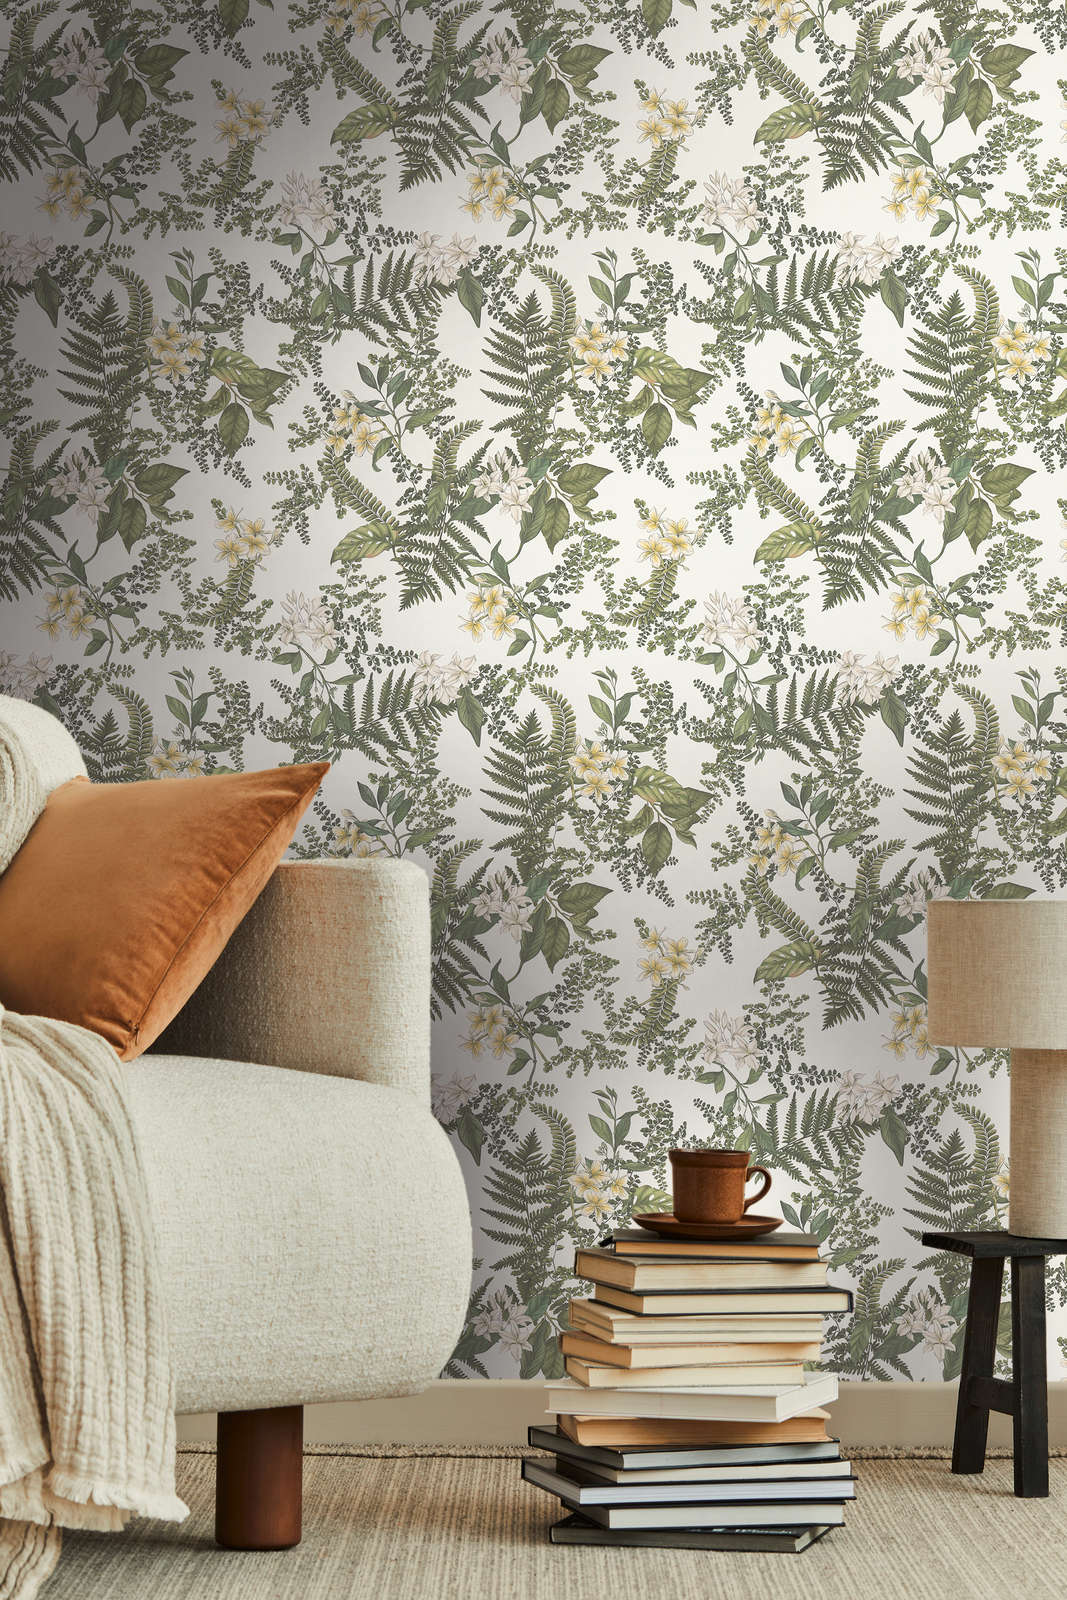             Floral wallpaper modern with flowers & grasses textured matt - white, dark green, yellow
        